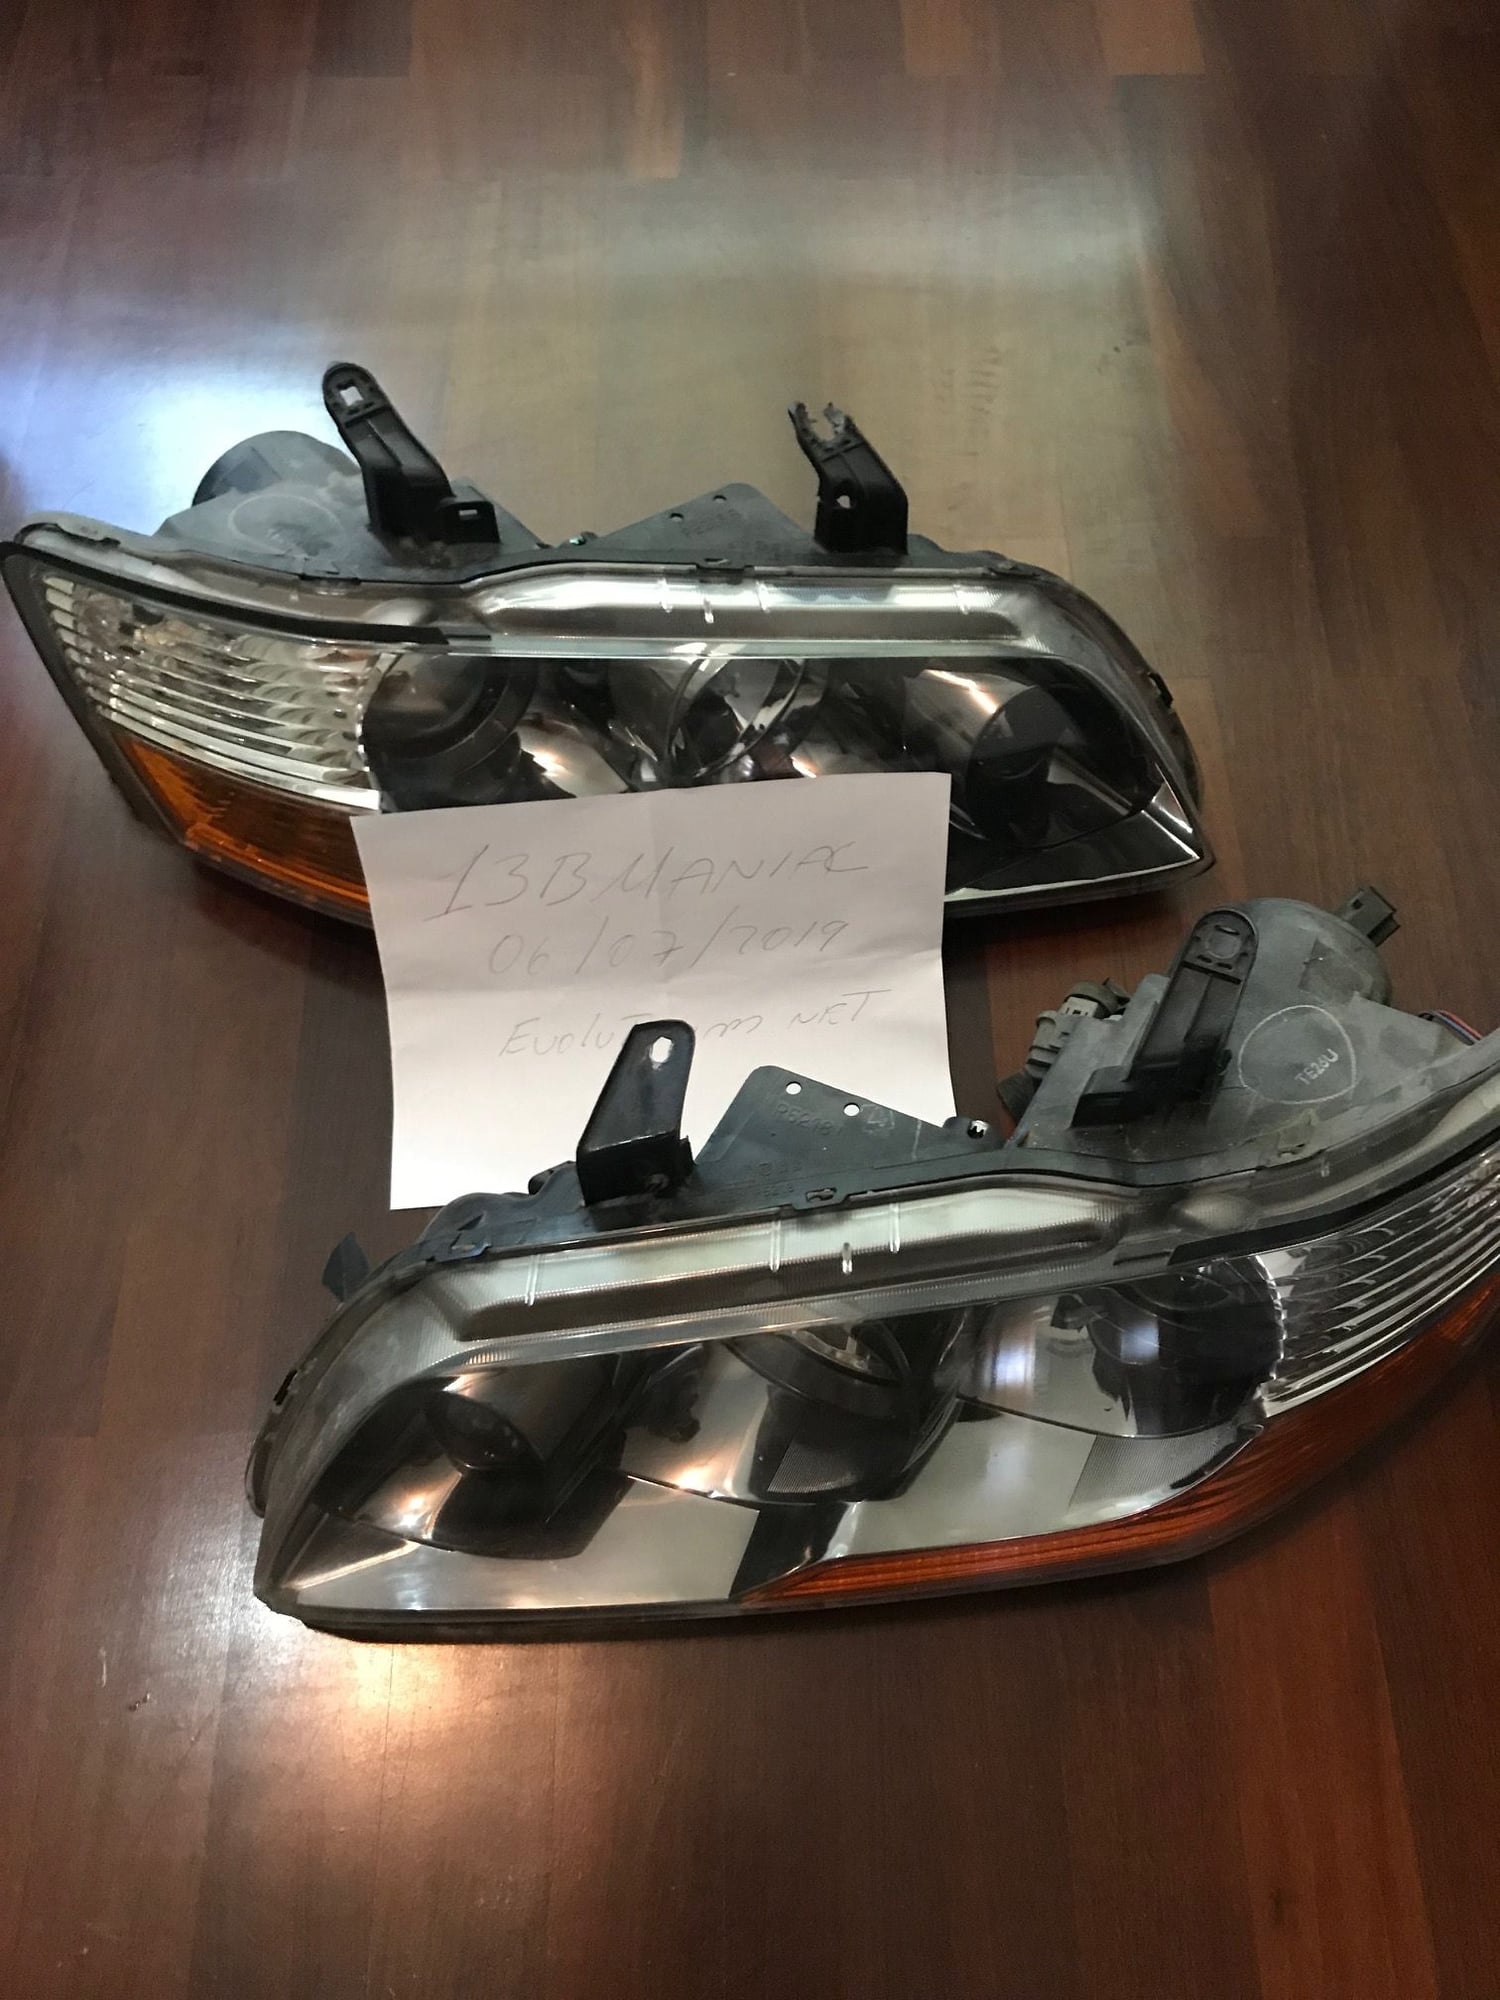 Exterior Body Parts - Evo 9 JDM Black/Chrome Headlights - Used - Miami, FL 33126, United States